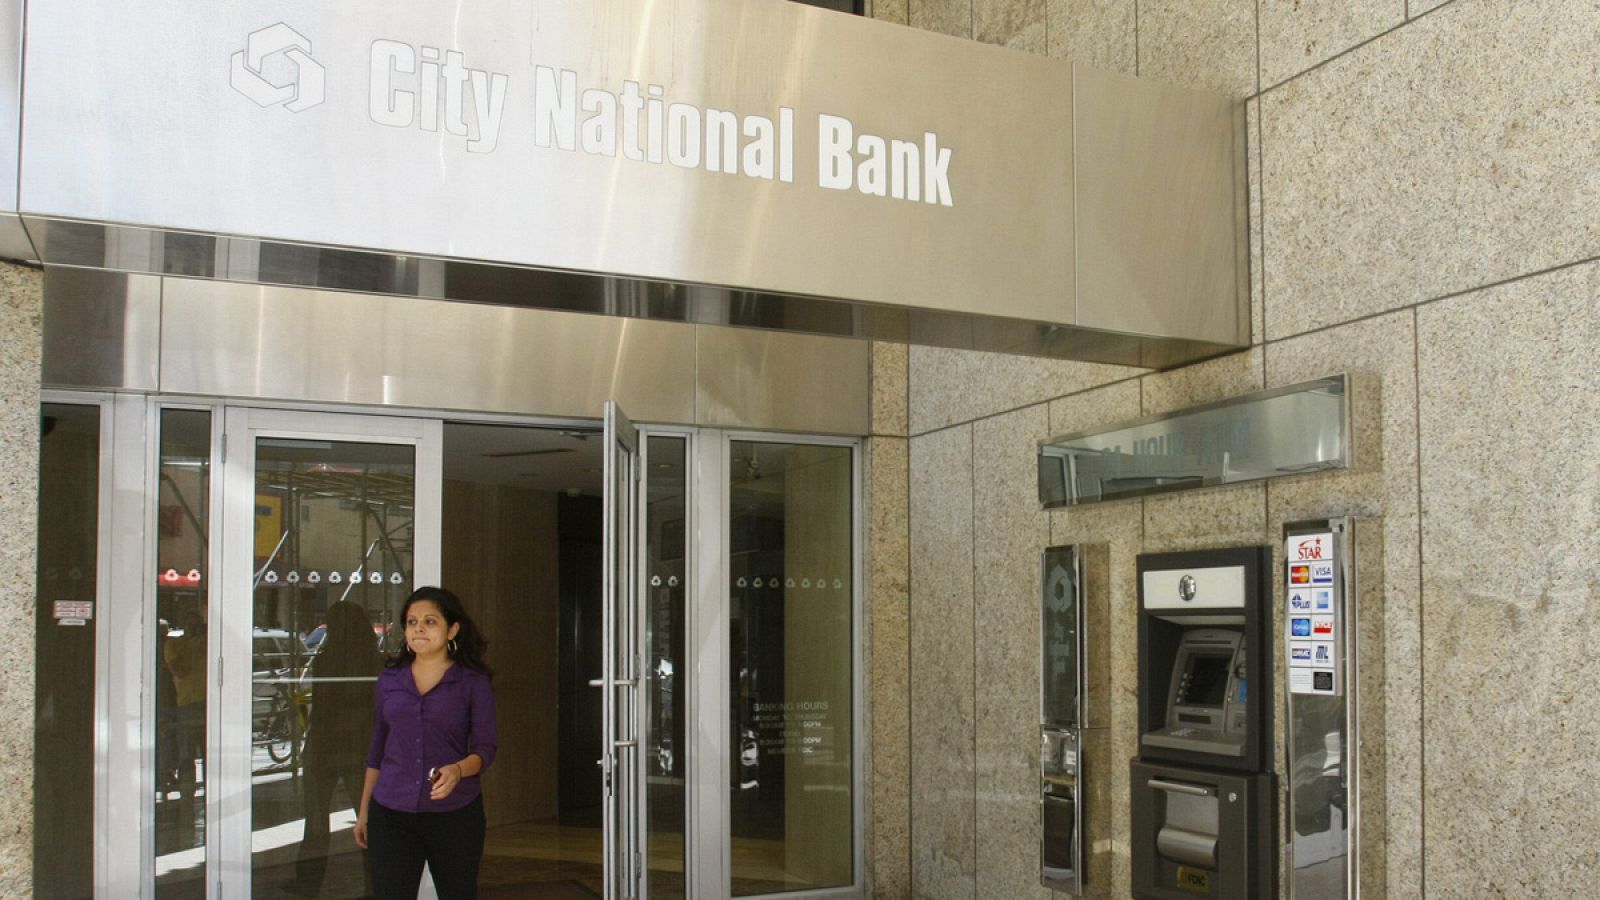 Sucursal del City National Bank of Florida (Archivo)